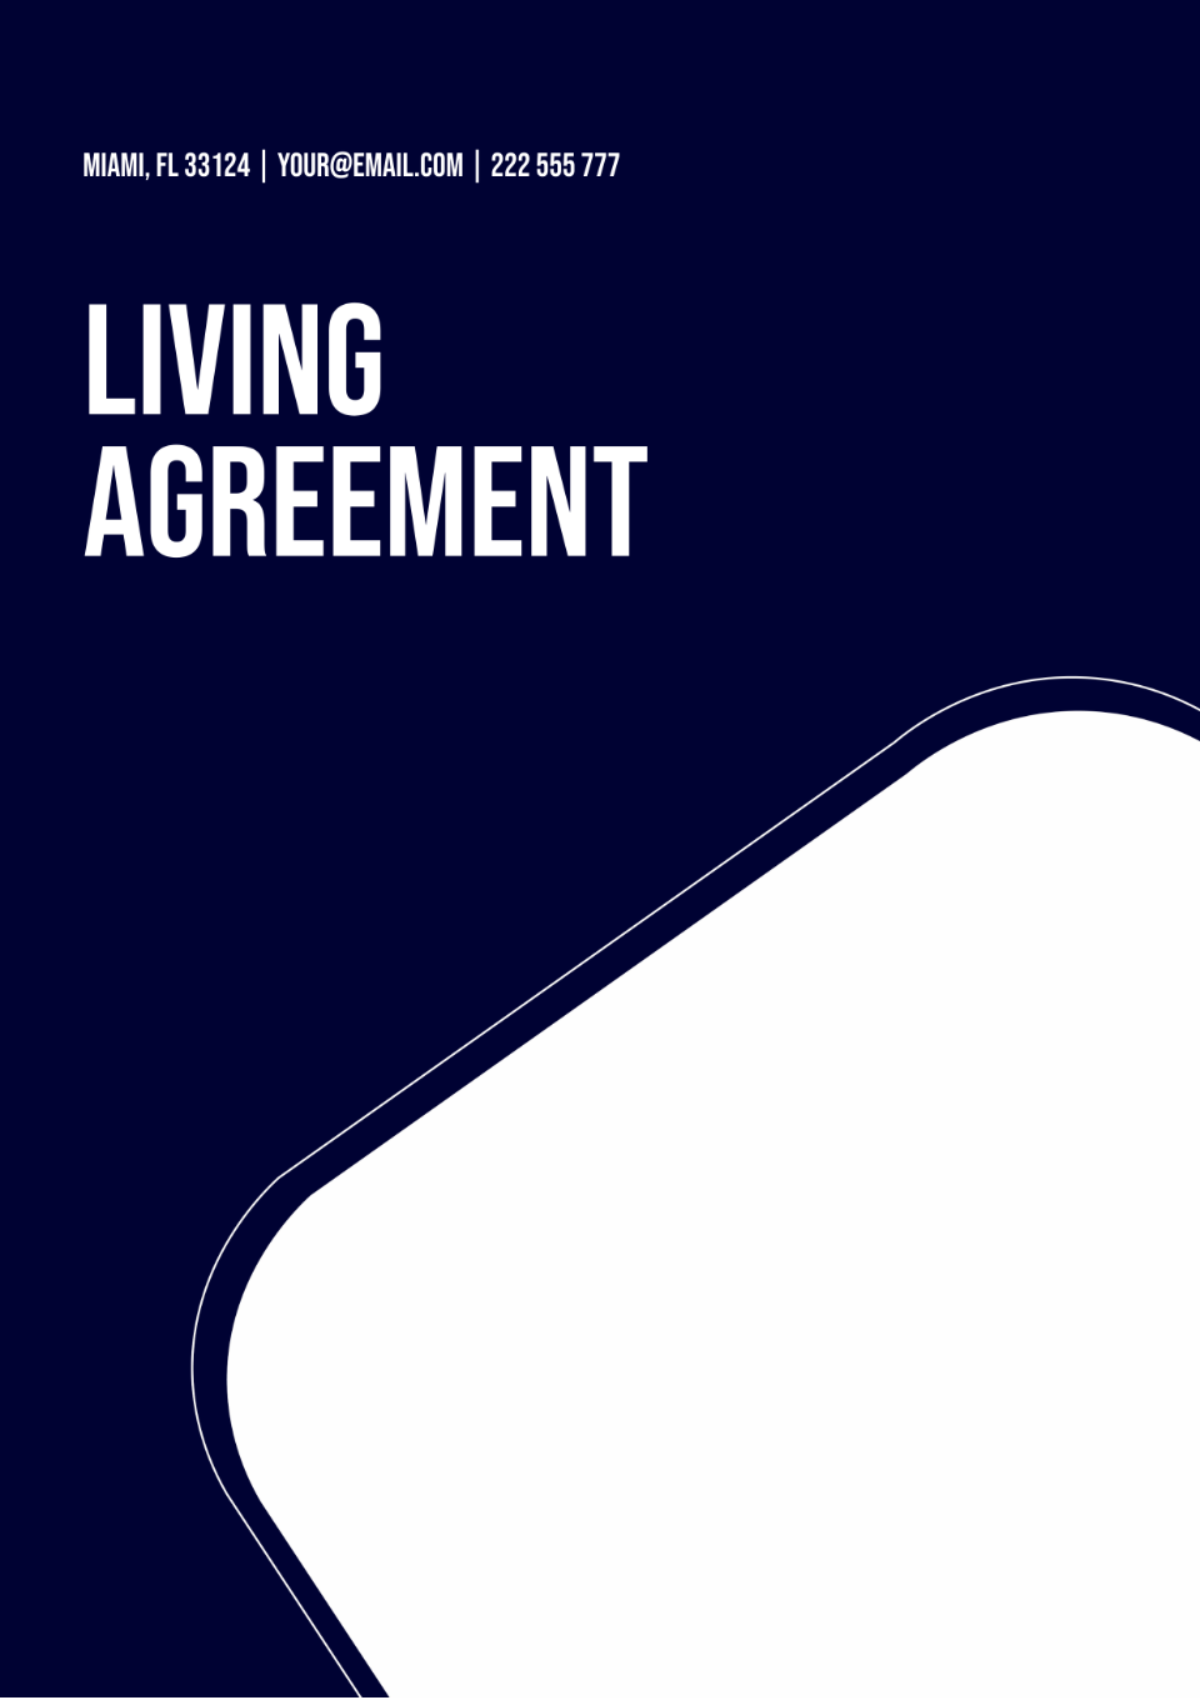 Living Agreement Template